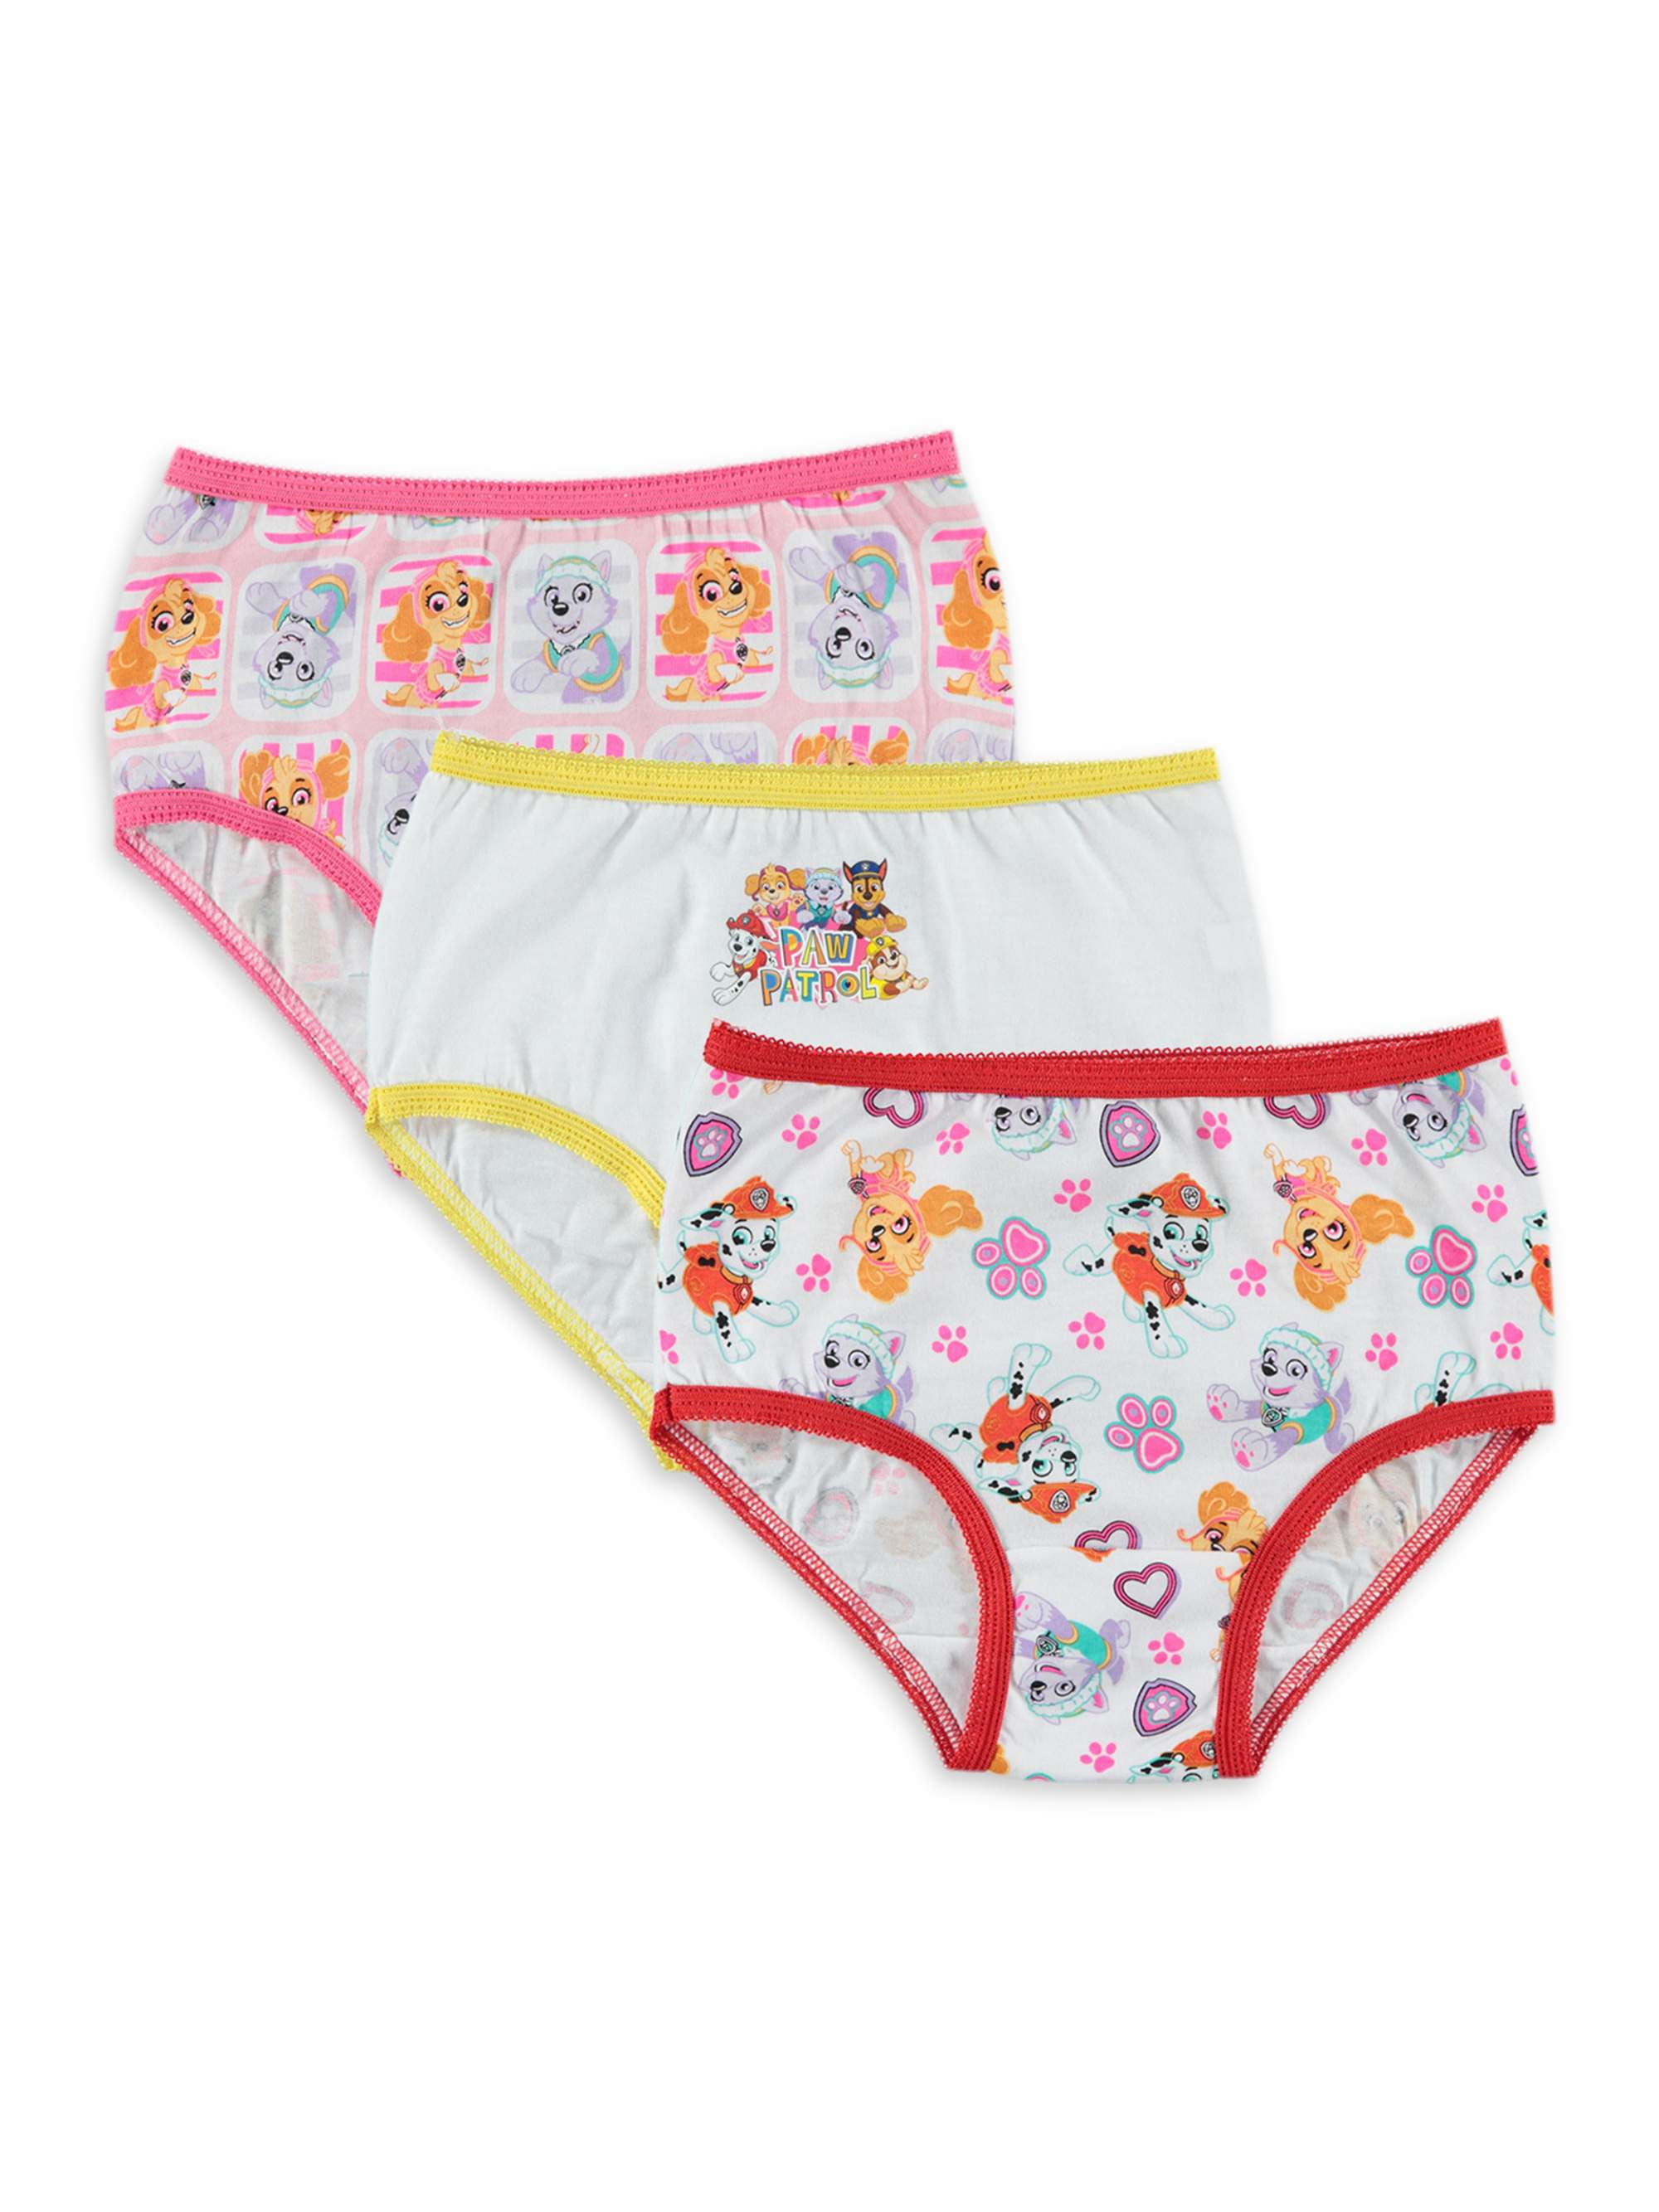 Girls Panties Mystery Pack Underwear Girls Underwear 3-pack Girls Panties  Toddler Girls Underwear Girls Panty Pack Brushed Poly 